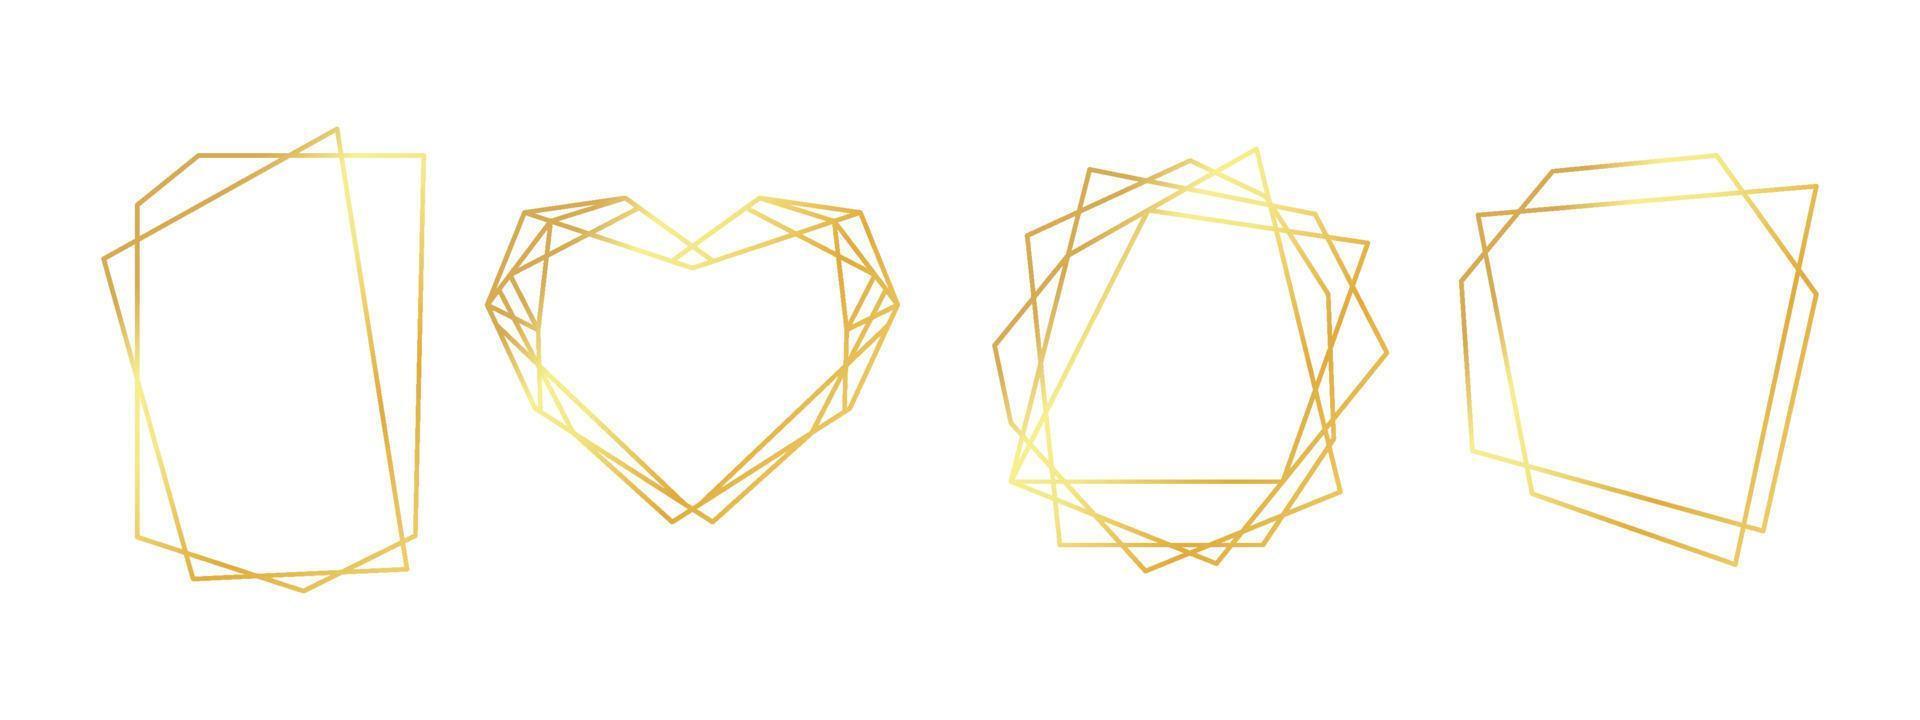 gyllene polygonal gränser. geometrisk bröllop ramar isolerat på vit bakgrund vektor